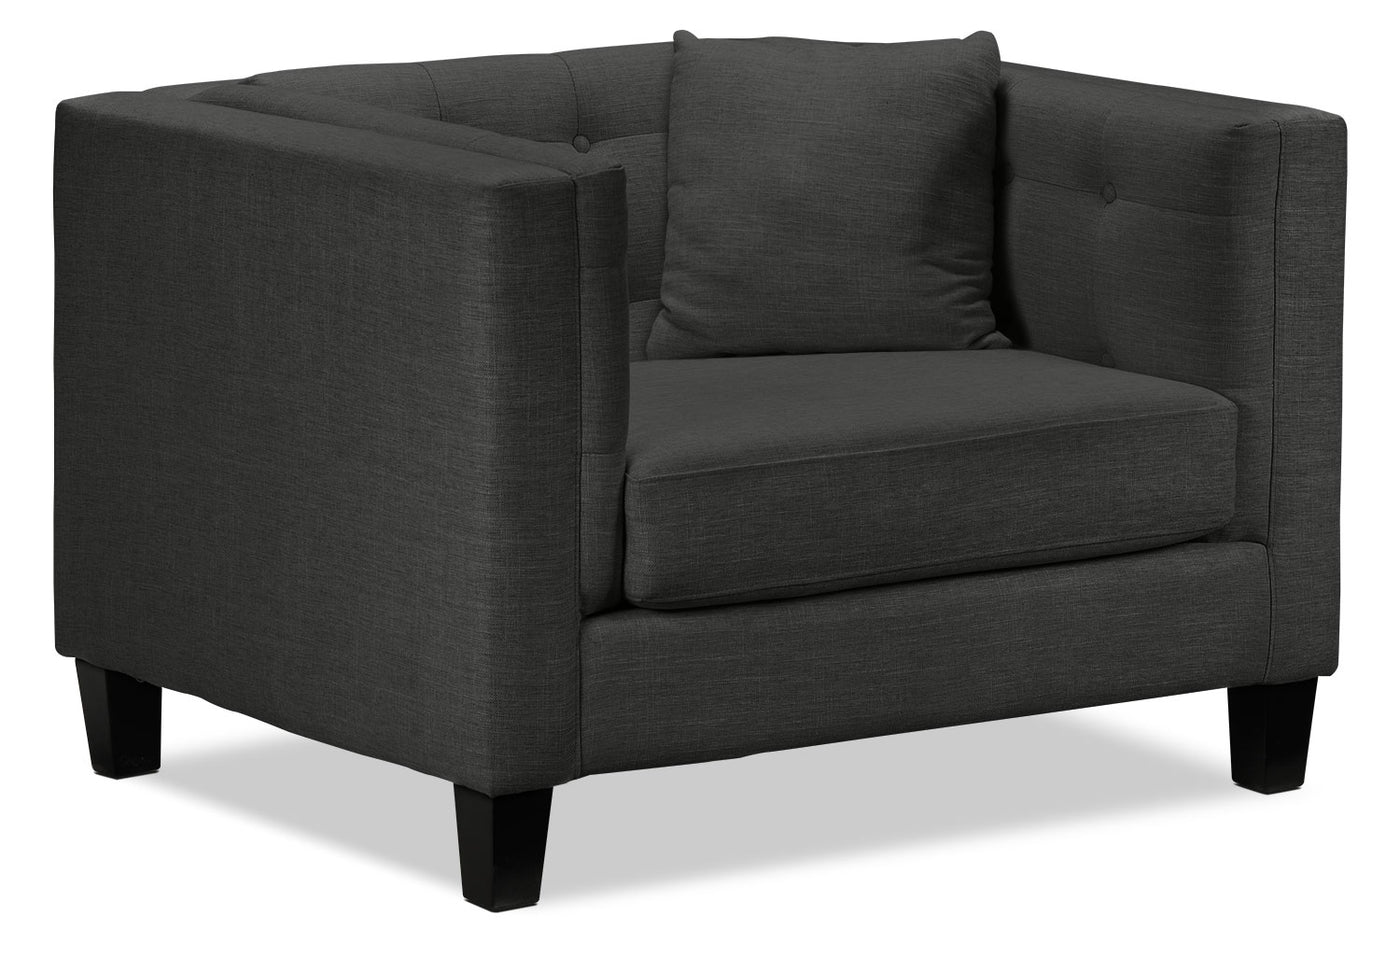 Astin Sofa, Loveseat and Chair and a Half Set - Dark Grey